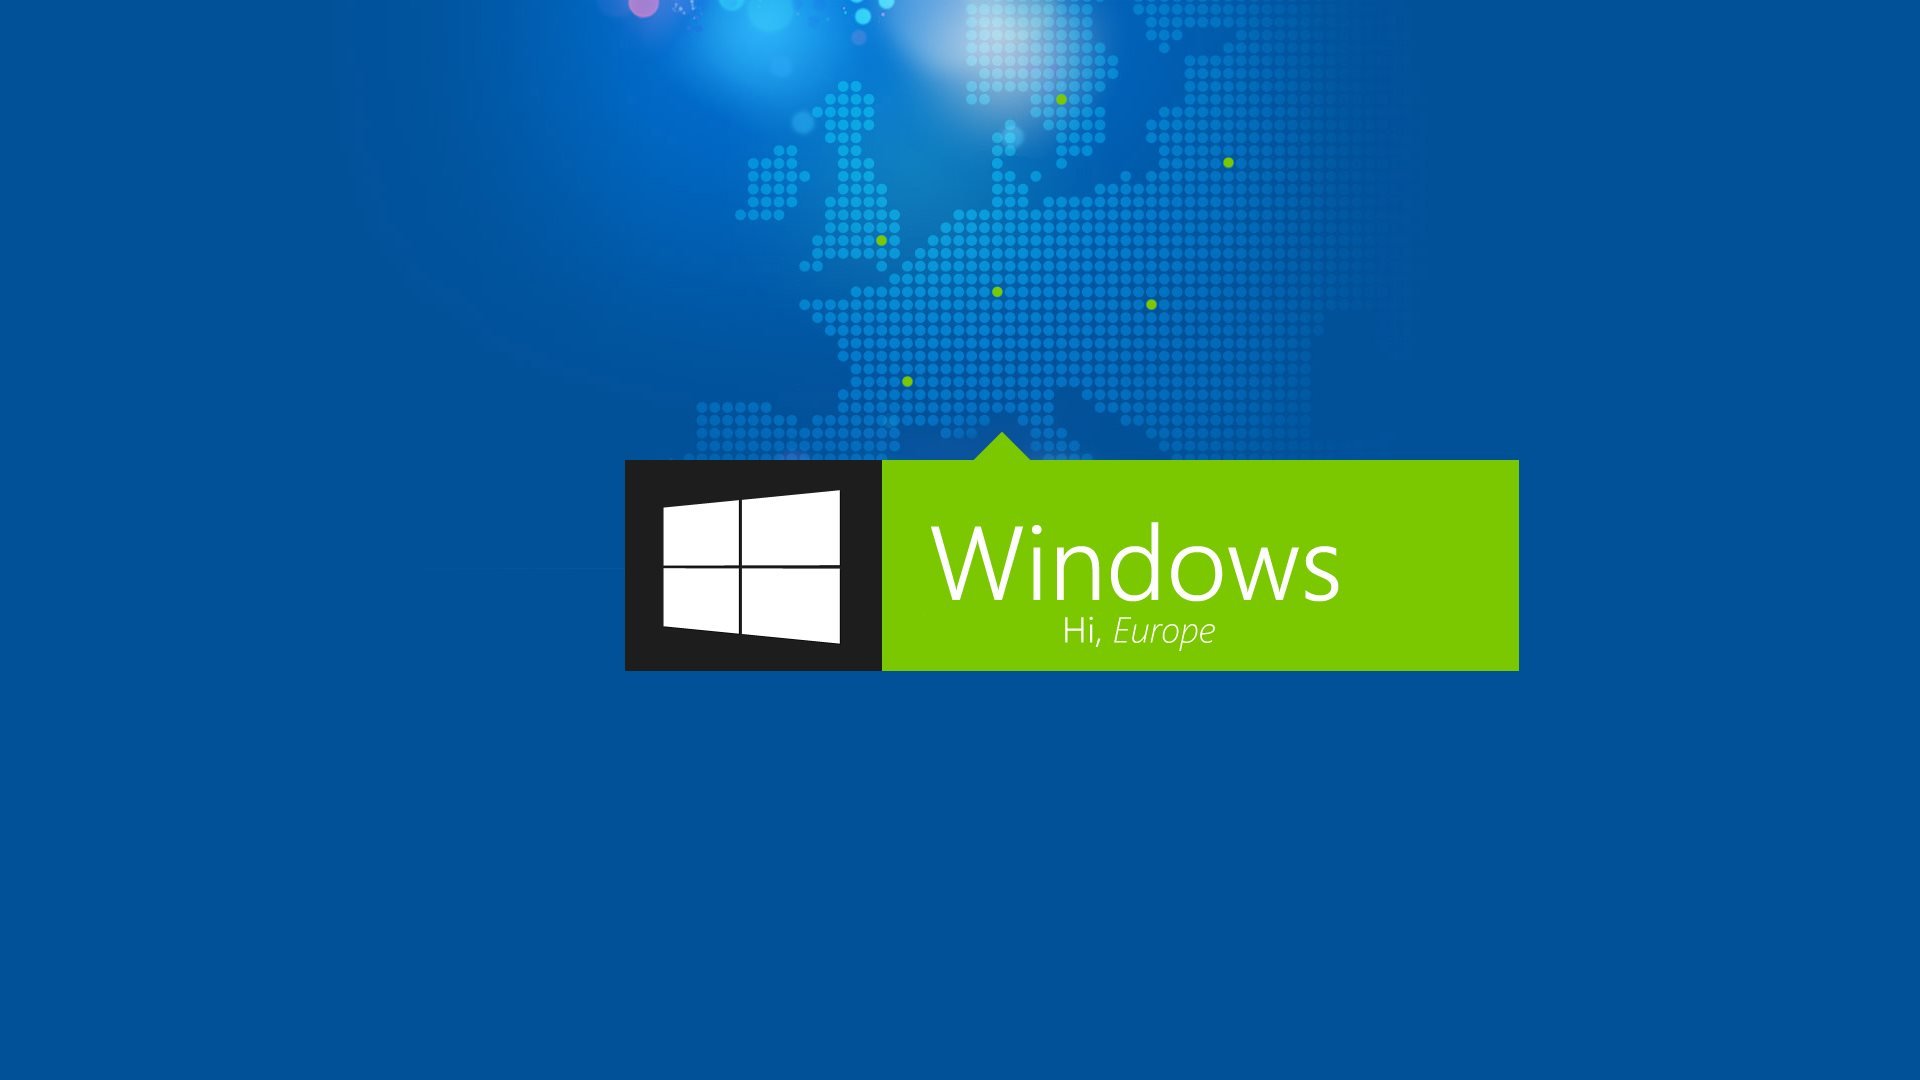 Download full hd 1920x1080 Windows 8 desktop wallpaper ID:78146 for free